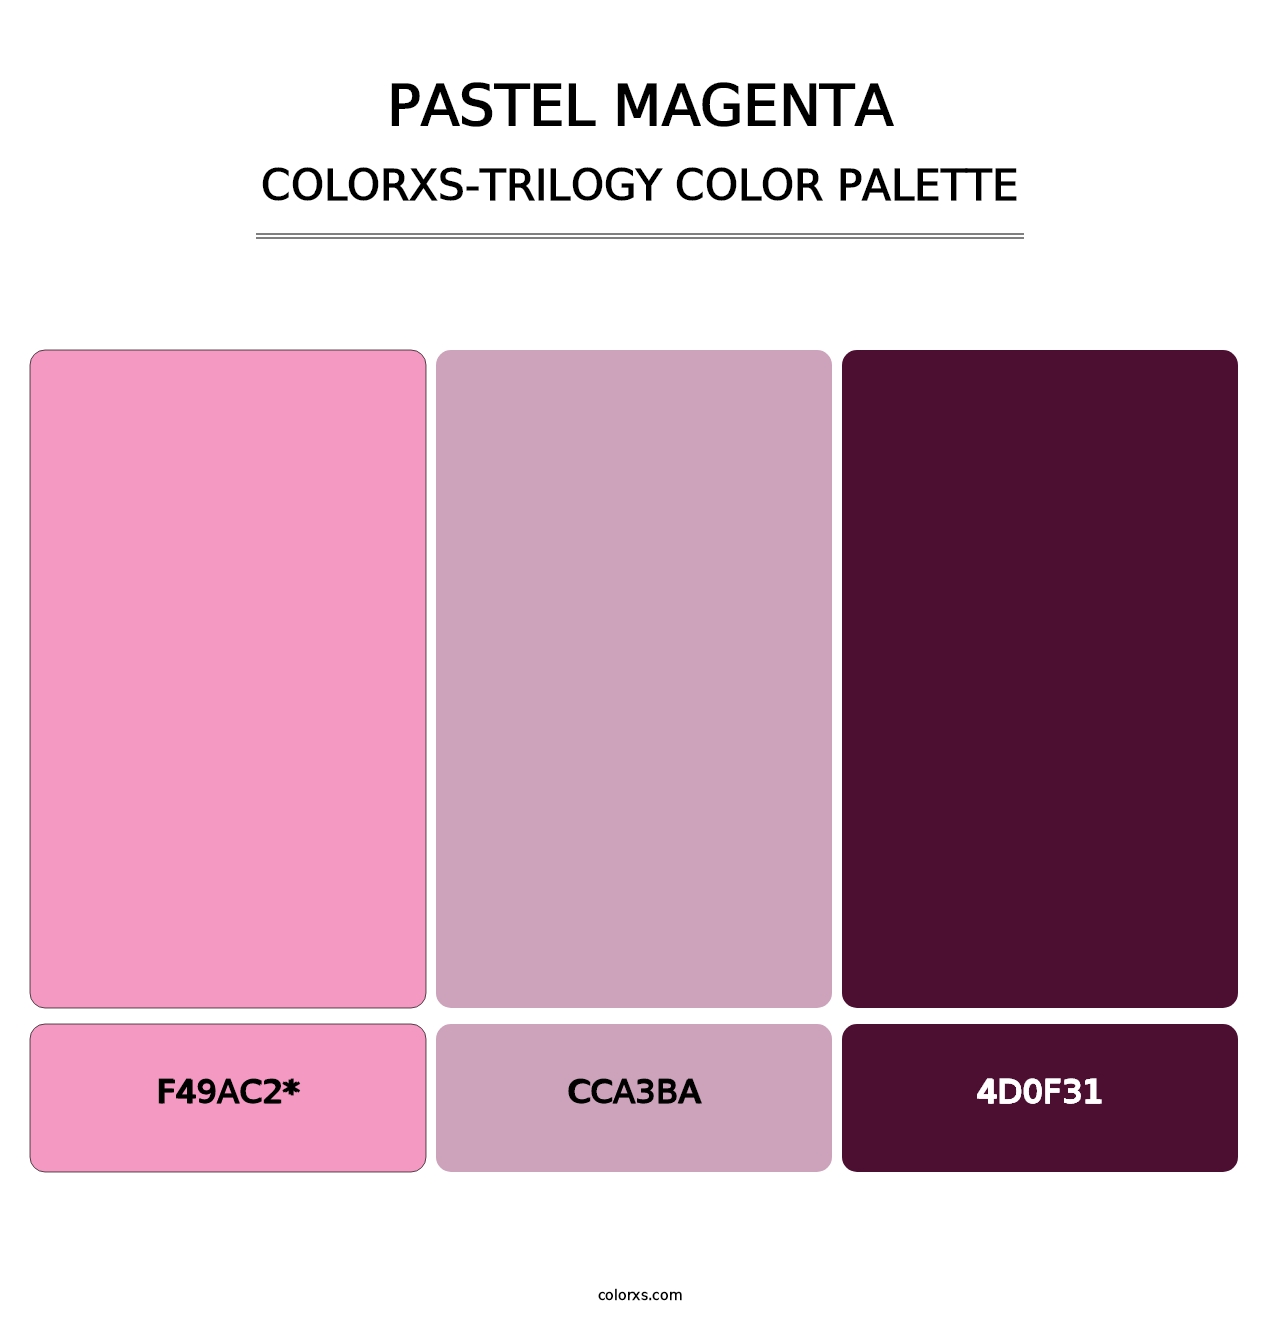 Pastel Magenta - Colorxs Trilogy Palette